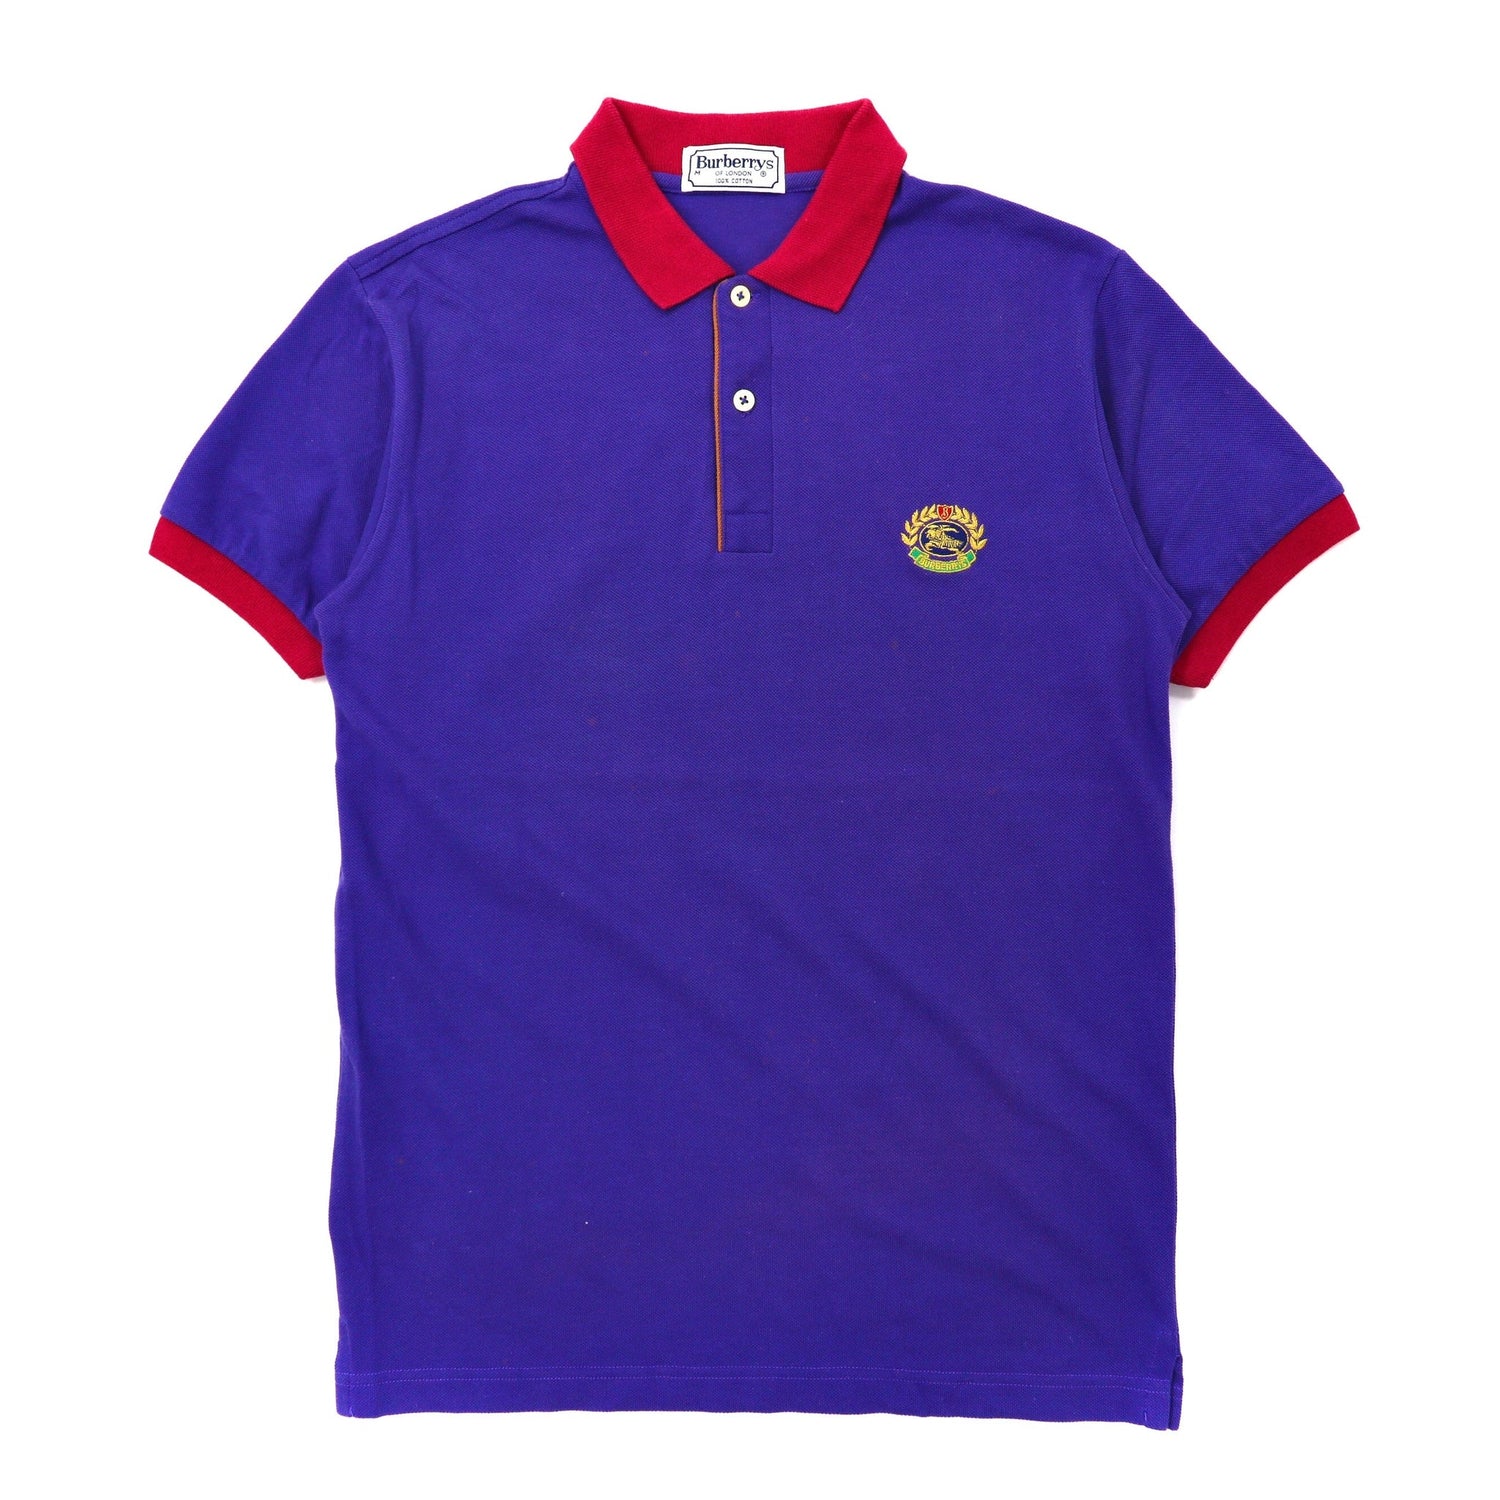 BURBERRYS Polo Shirt M Blue Cotton Emblem Embroider Embroidery